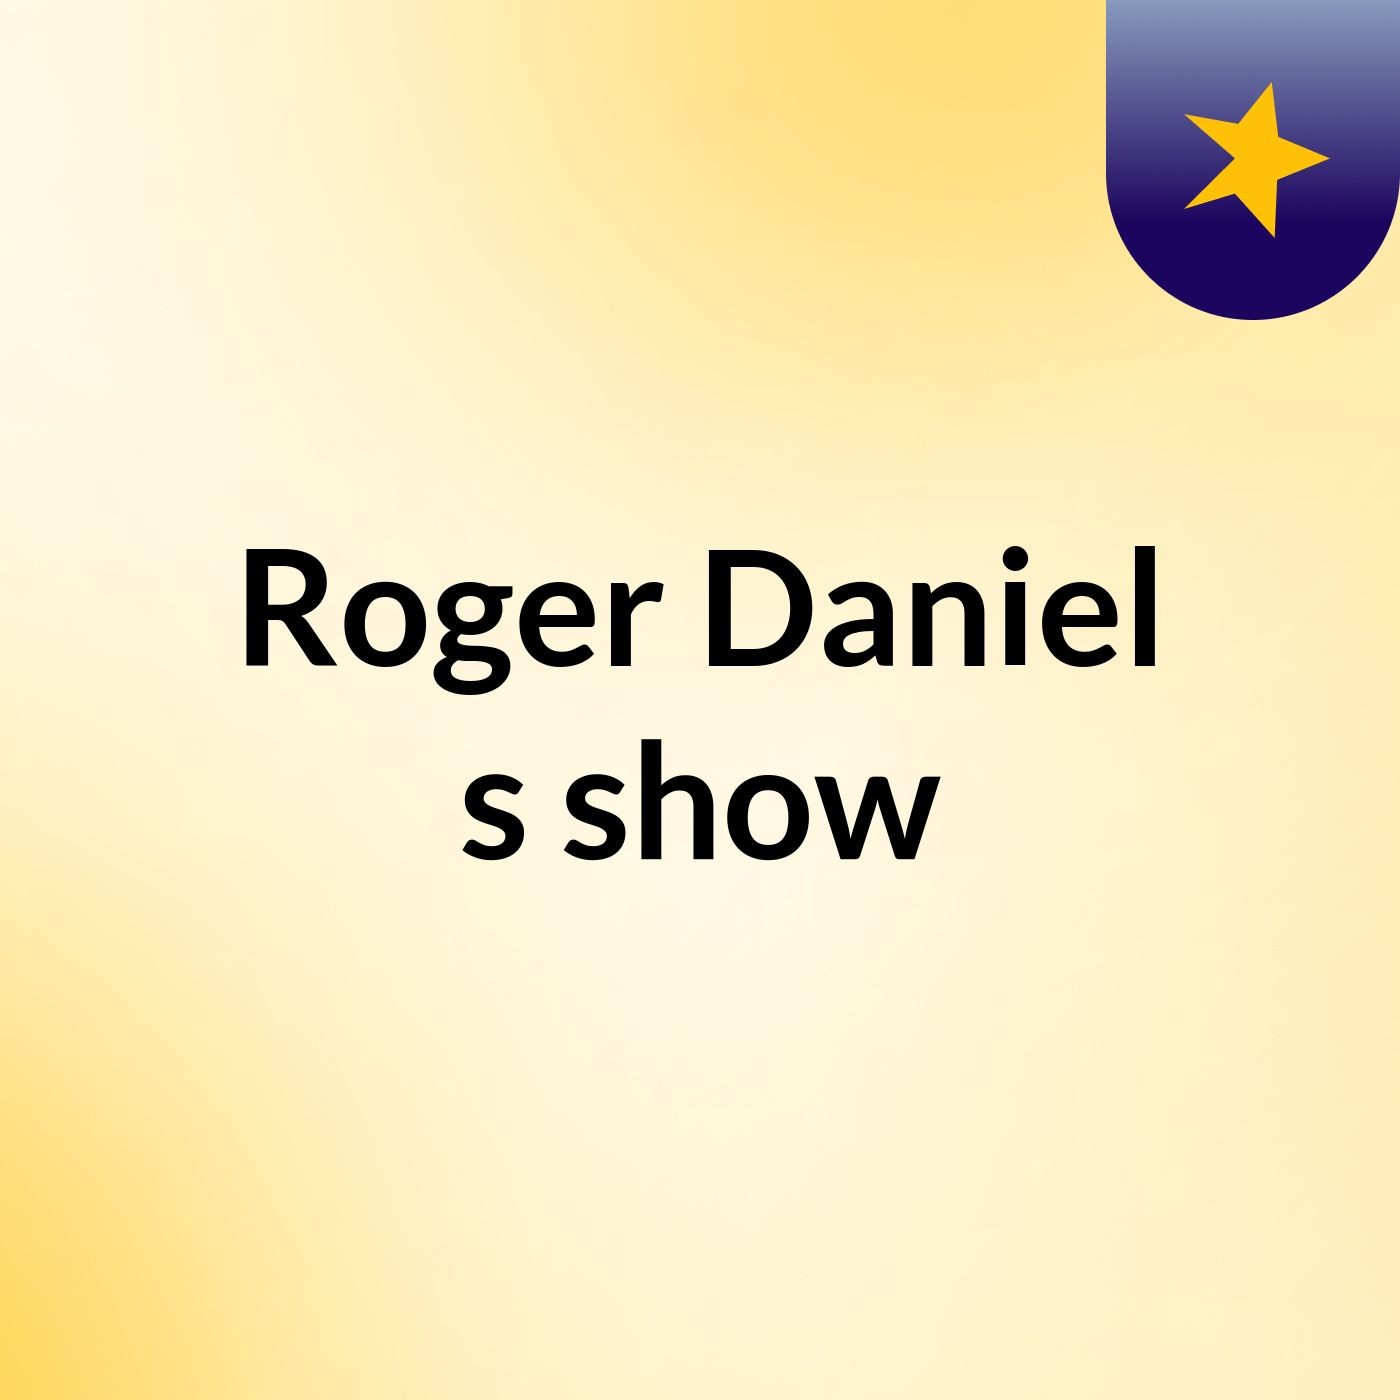 Roger Daniel's show